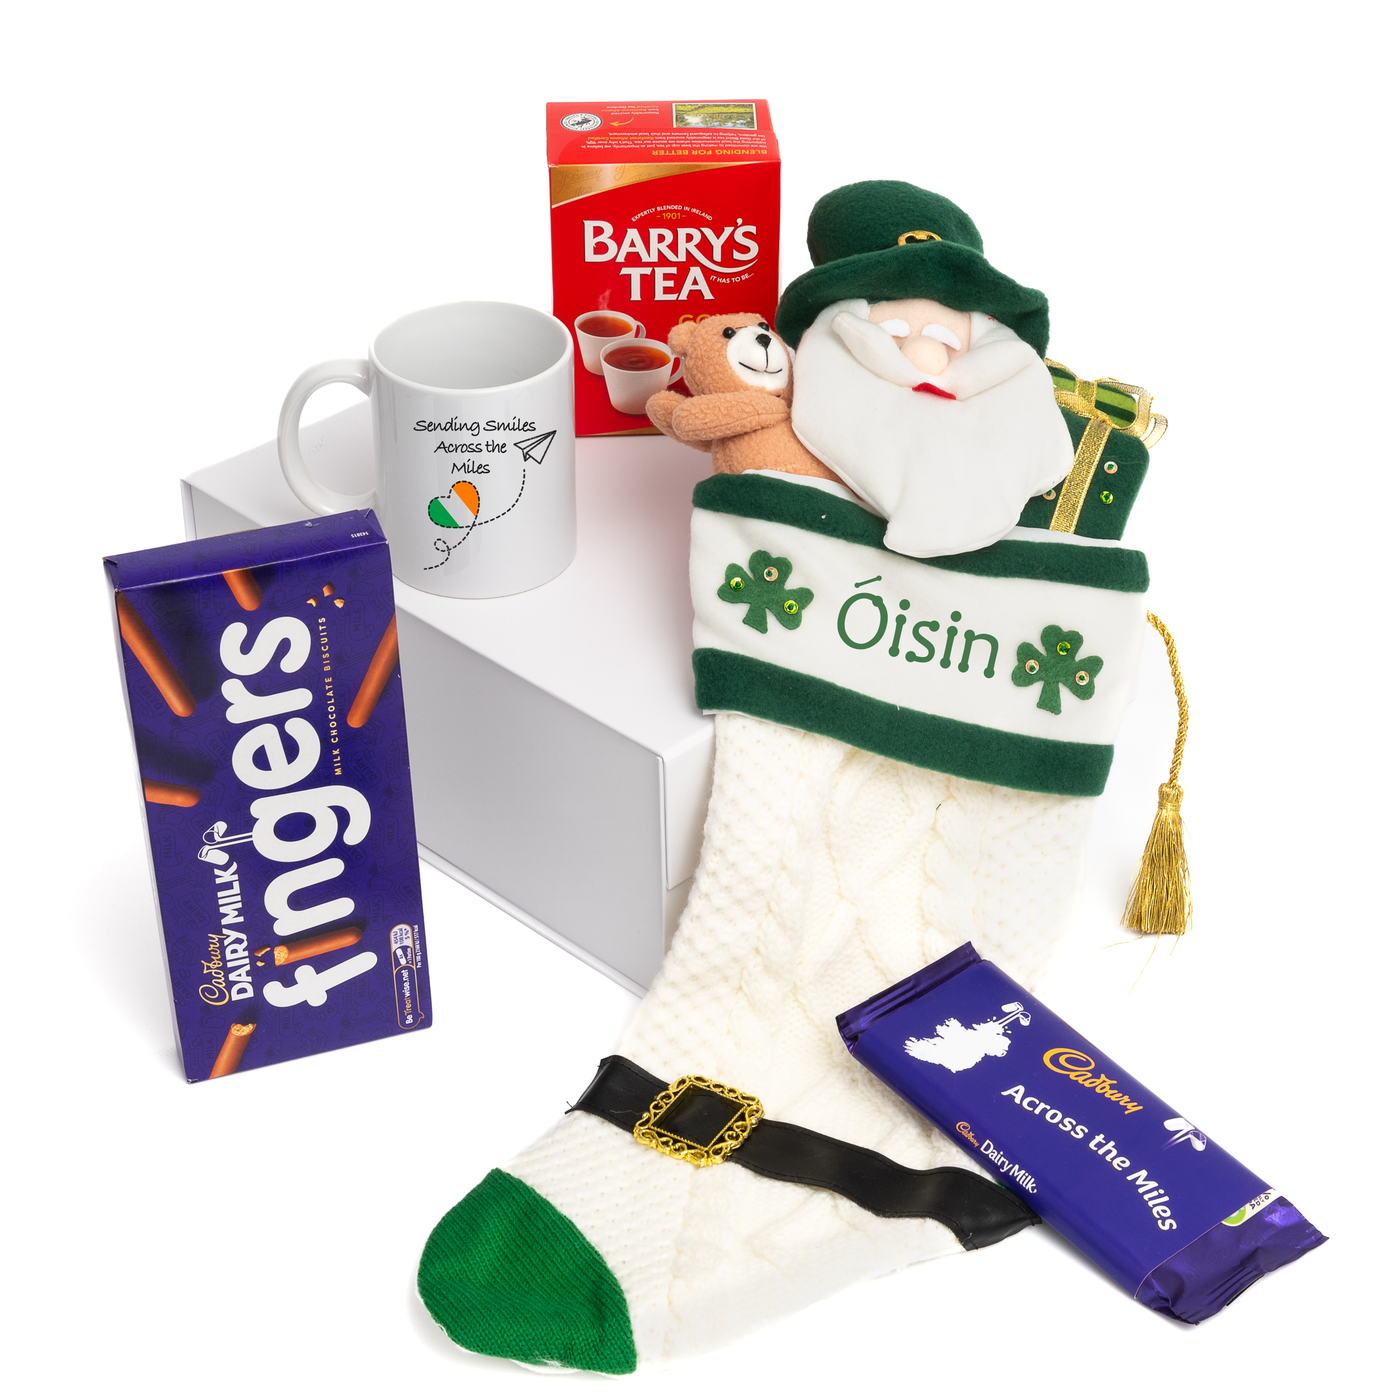 Personalised Irish Gift Set - Across the Miles at Christmas